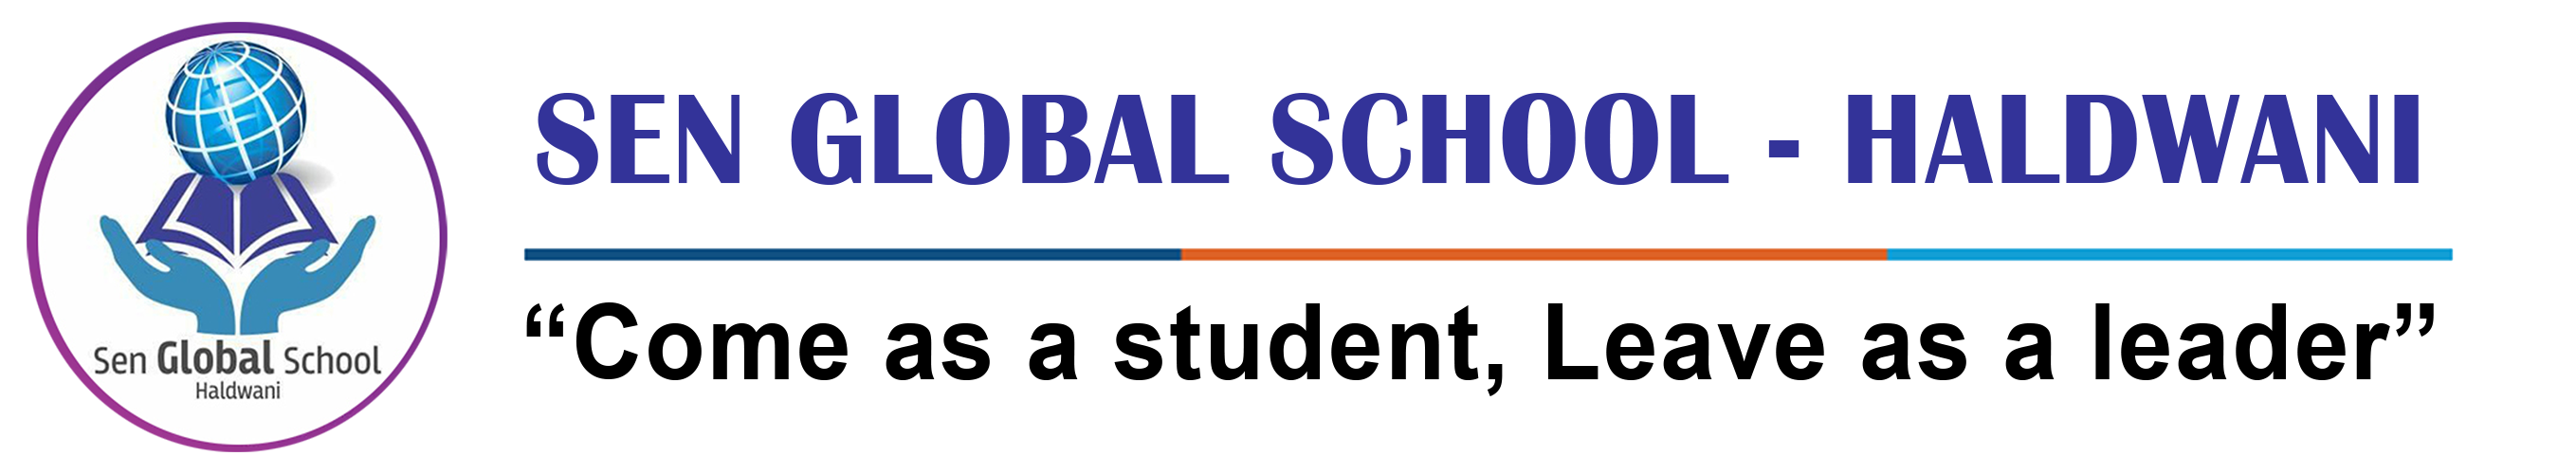 Sen-Global-School-logo